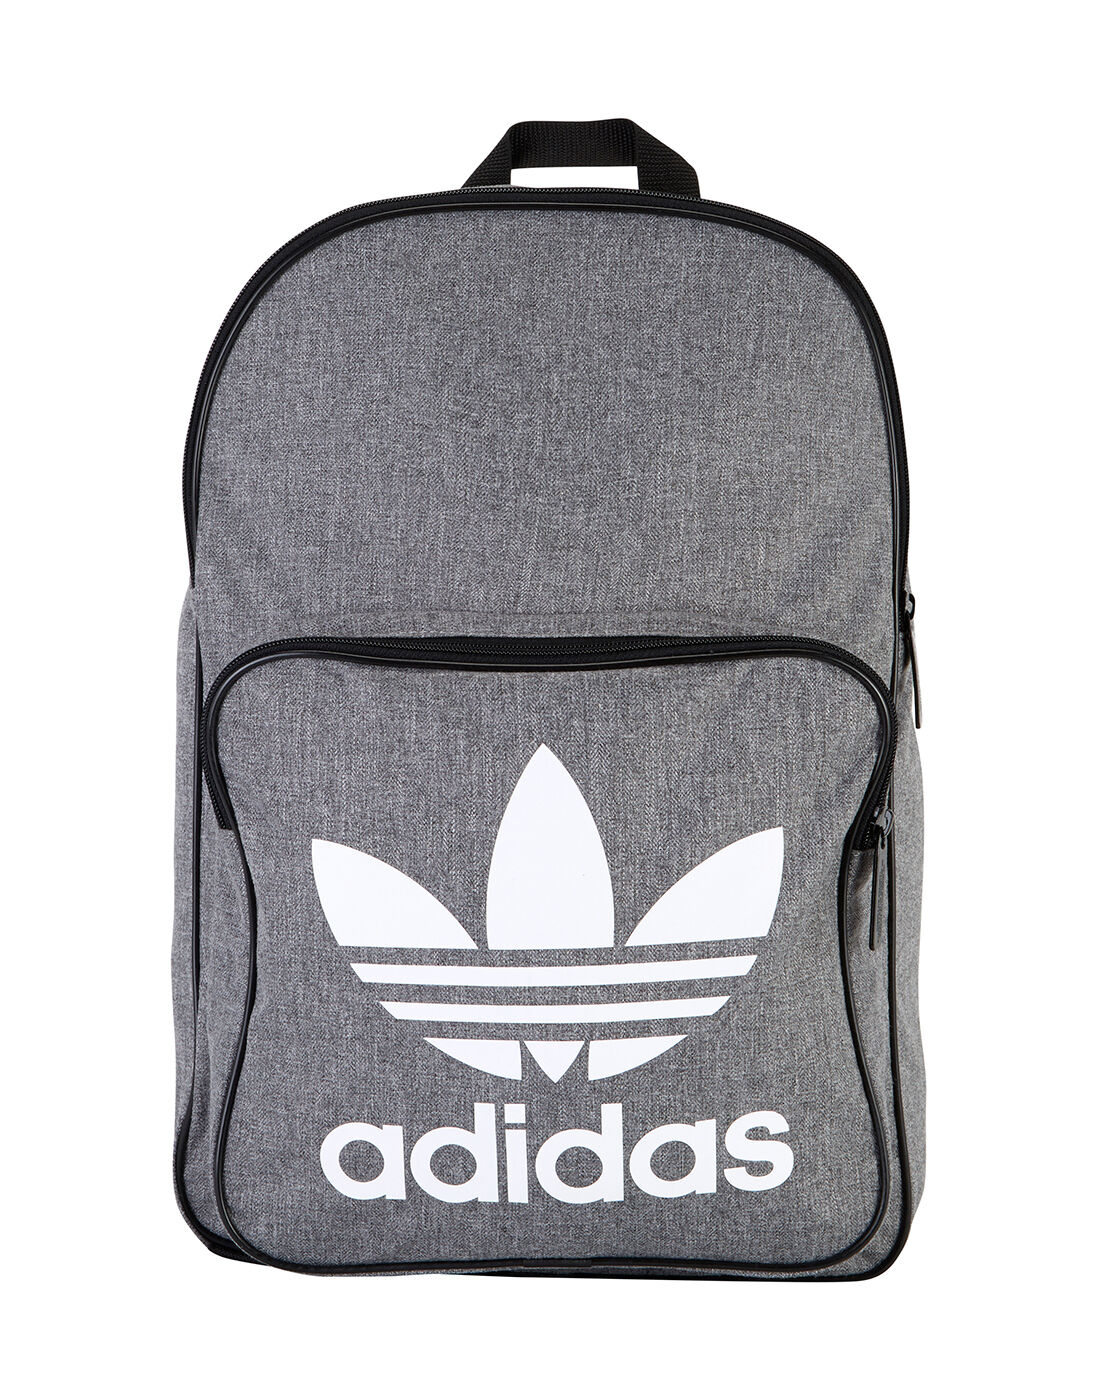 black and grey adidas backpack